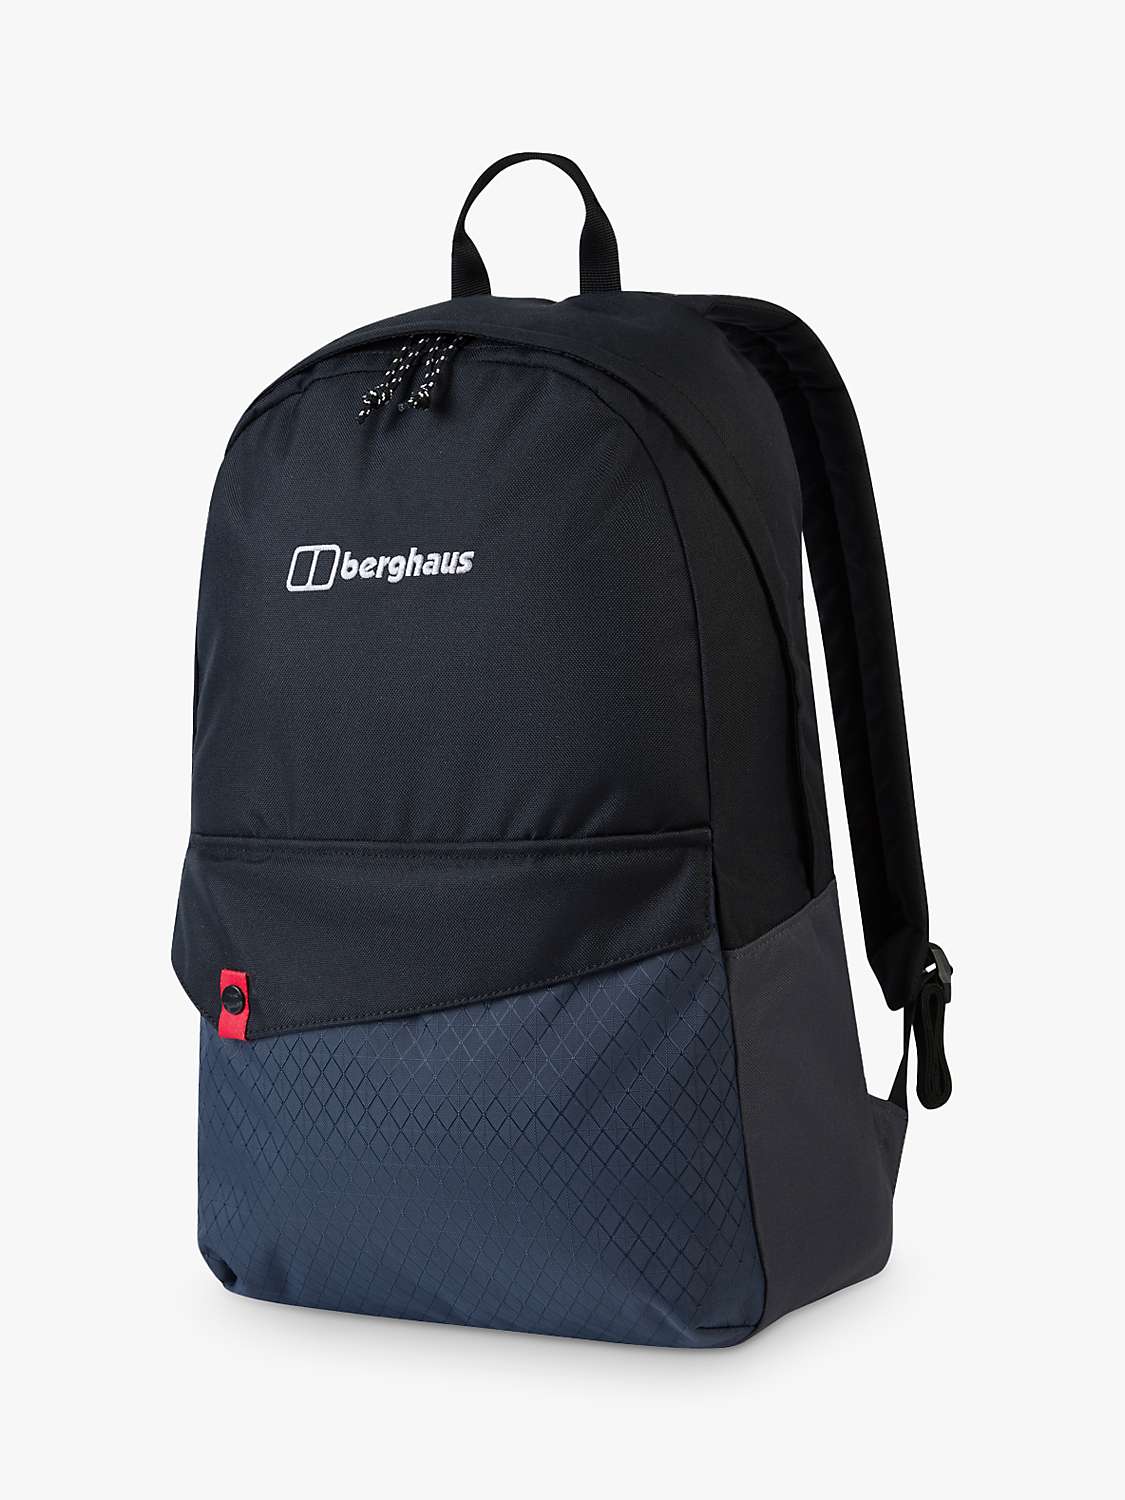 Buy Berghaus Versatile Rucksack Backpack, Black/Carbon Online at johnlewis.com